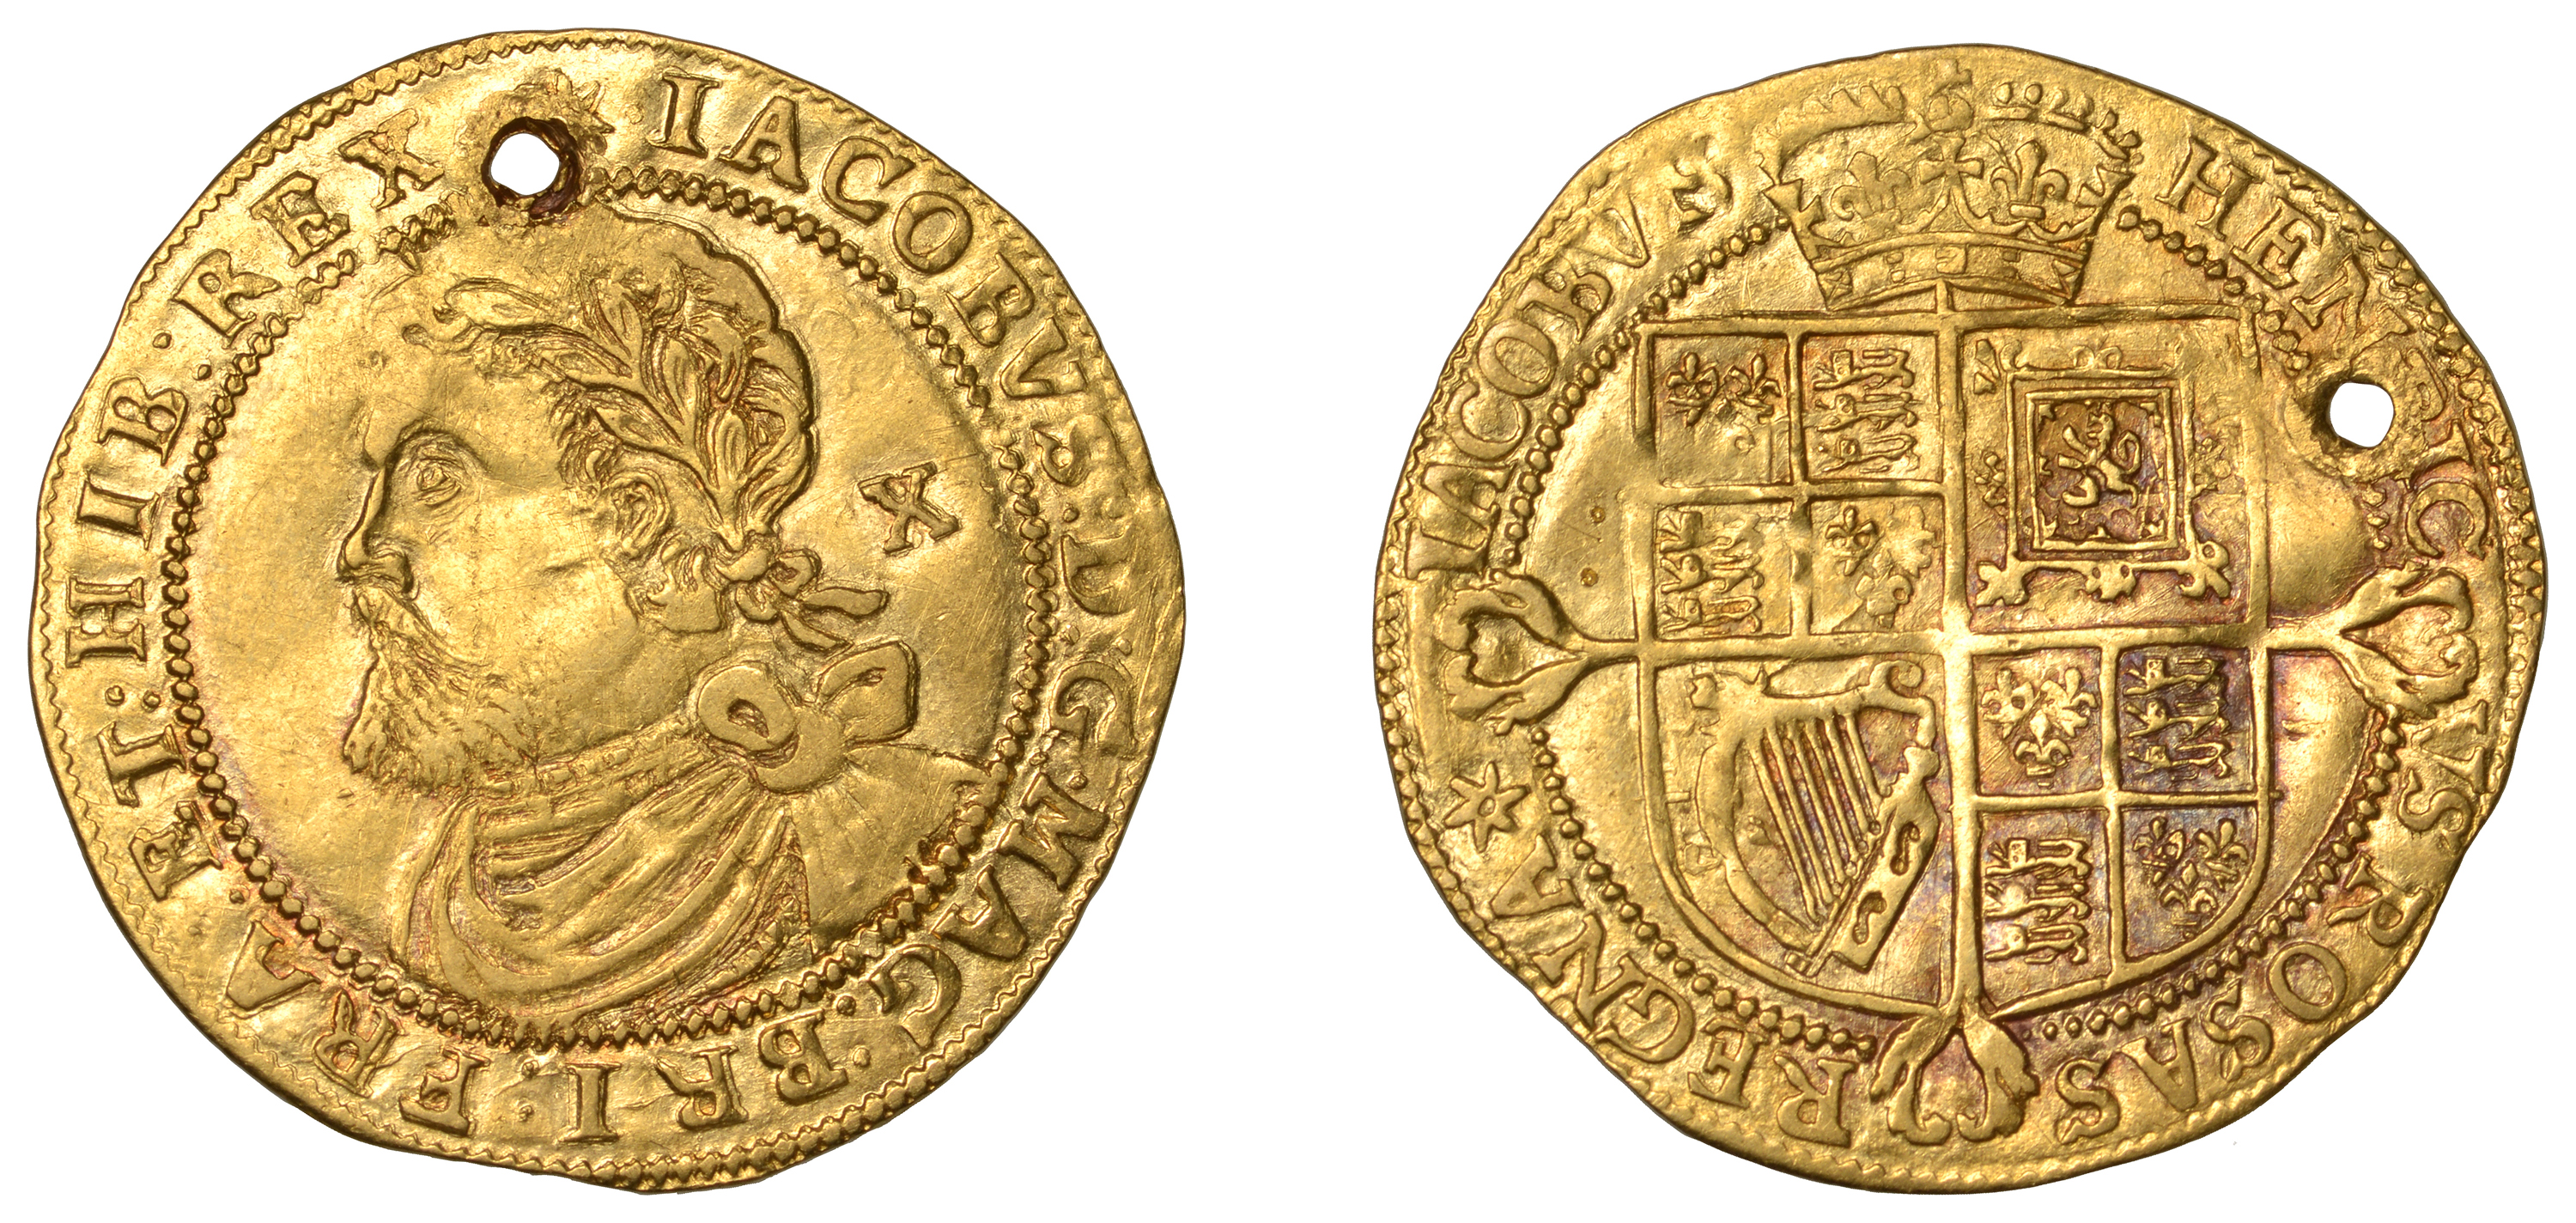 James I (1603-1625), Third coinage, Half-Laurel, mm. spur rowel [1619-20], iacobvs: d: g: ma...